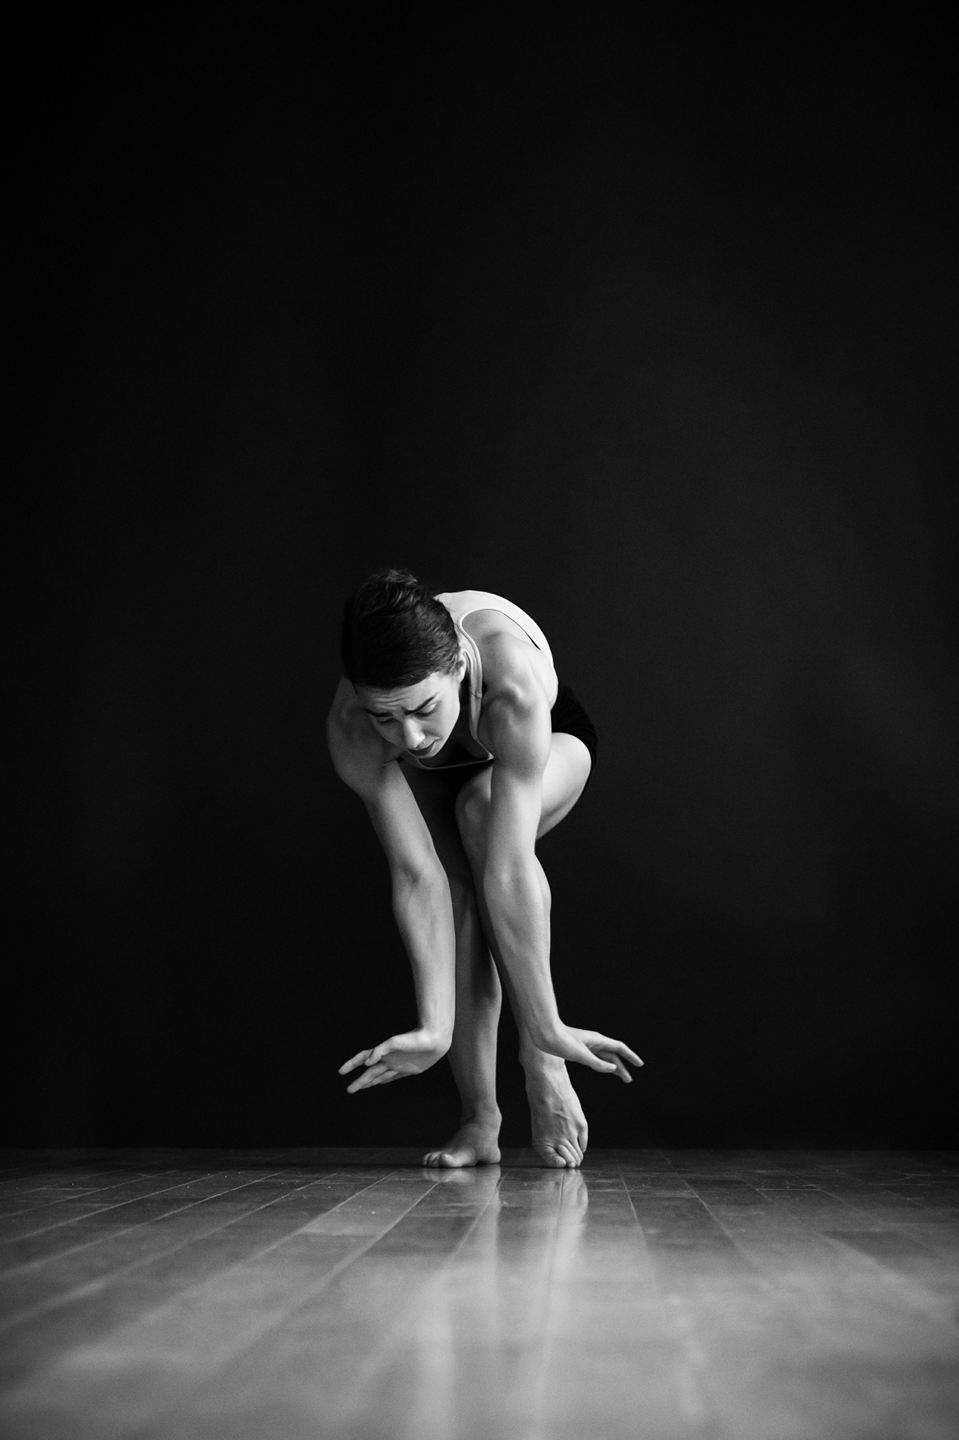 Los Angeles Dance Portrait Photo - Olga Sokolova - by Tommy Xing Photography 10.JPG